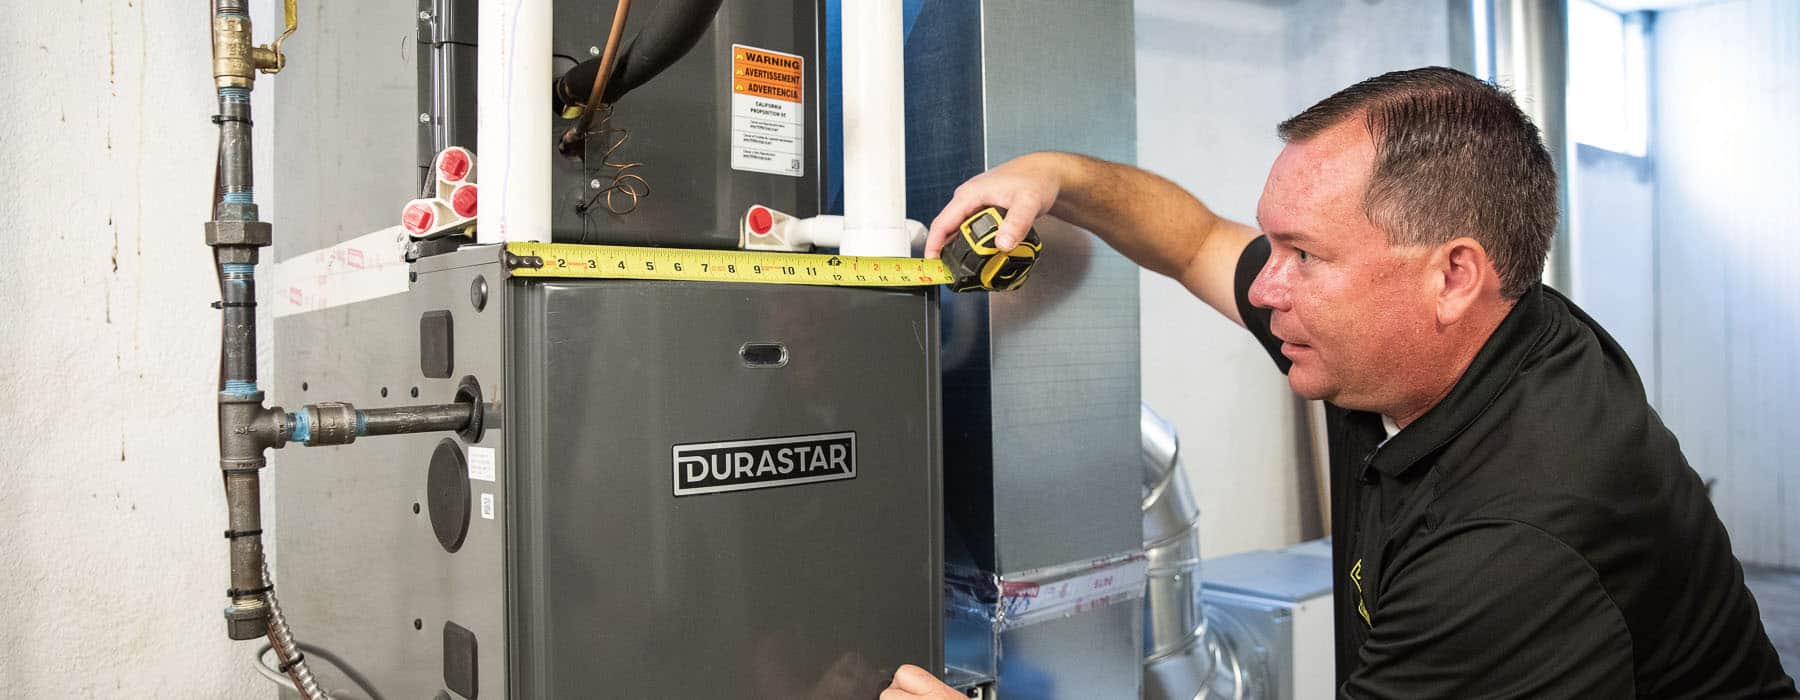 An HVAC technician holds a measuring tape horizontally across a Durastar furnace panel.